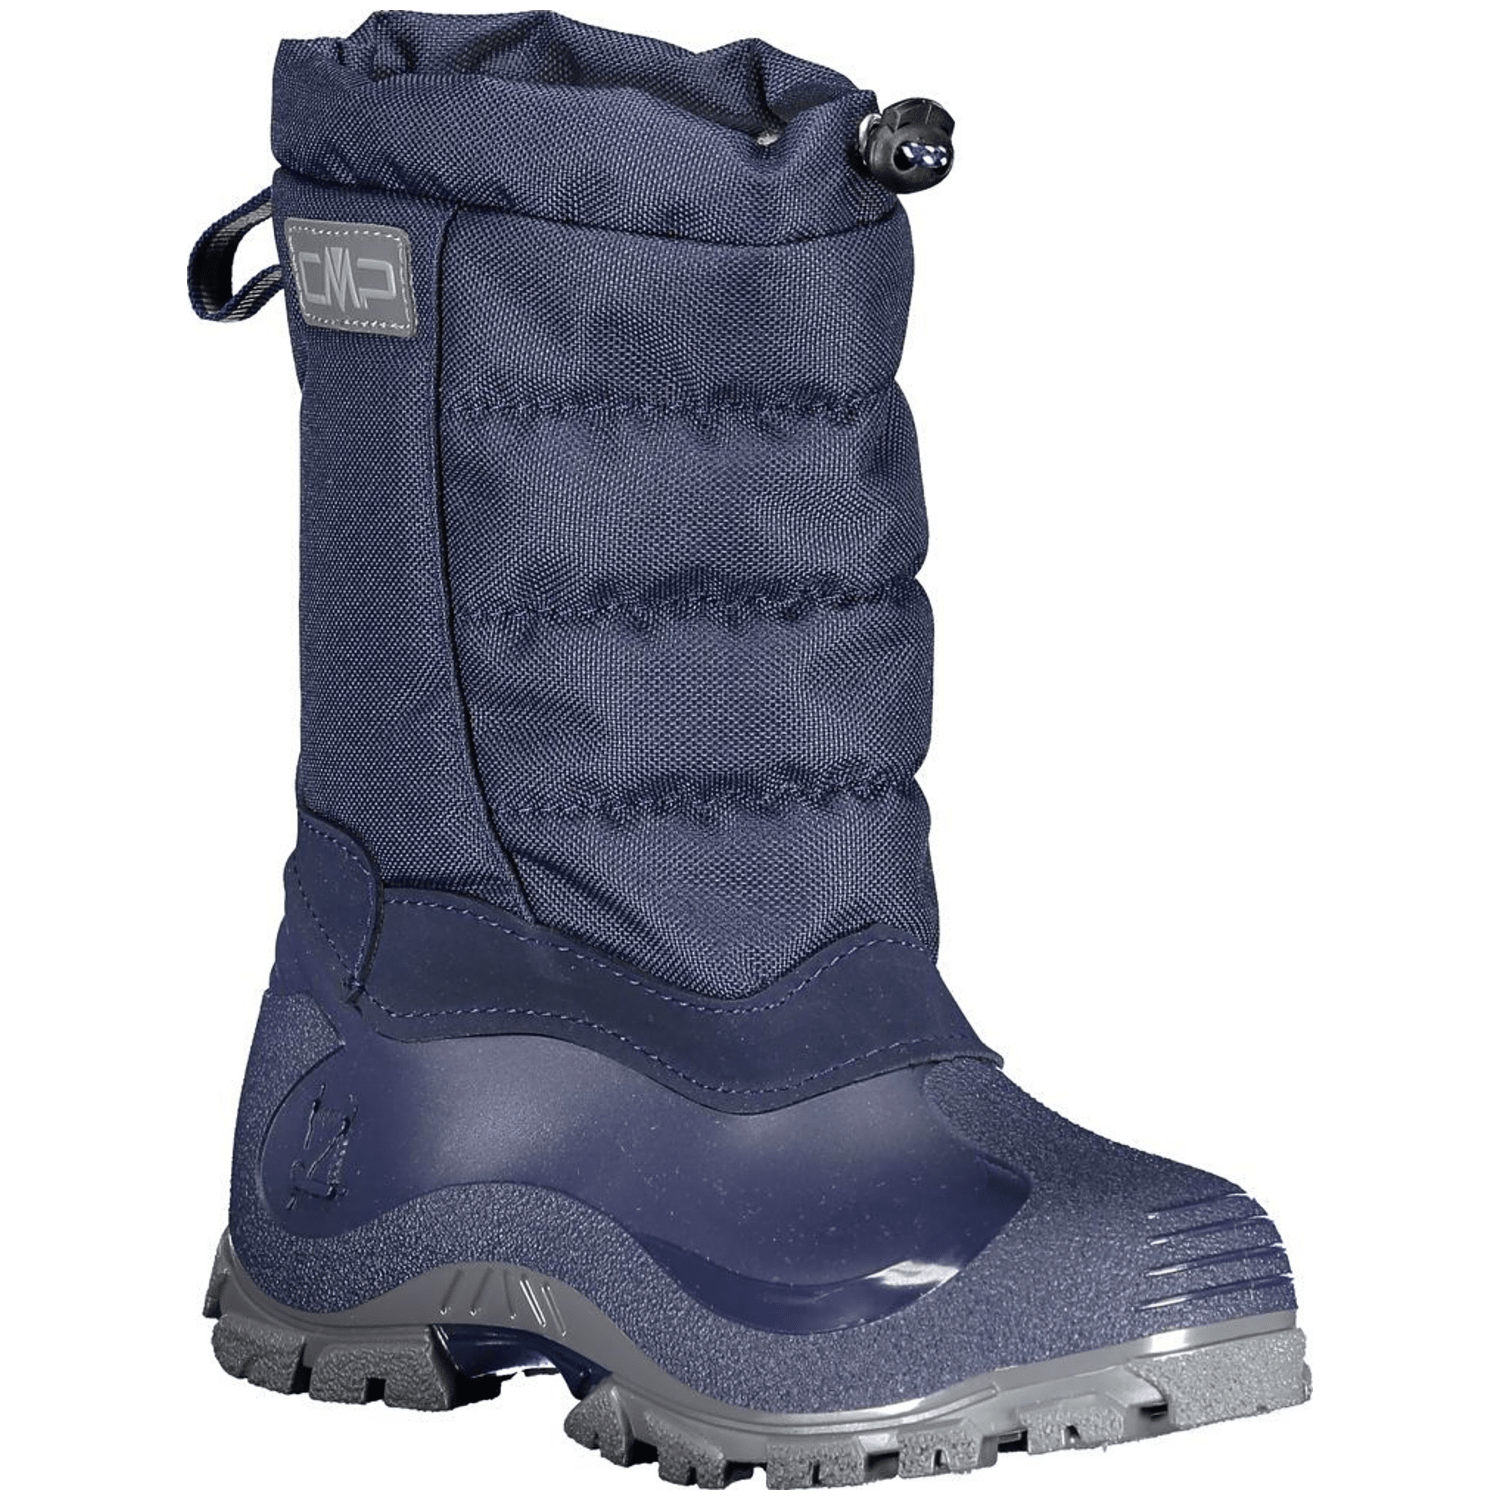 CMP Hanki 2.0 Snow Boots Jungen Apres-Schuhe